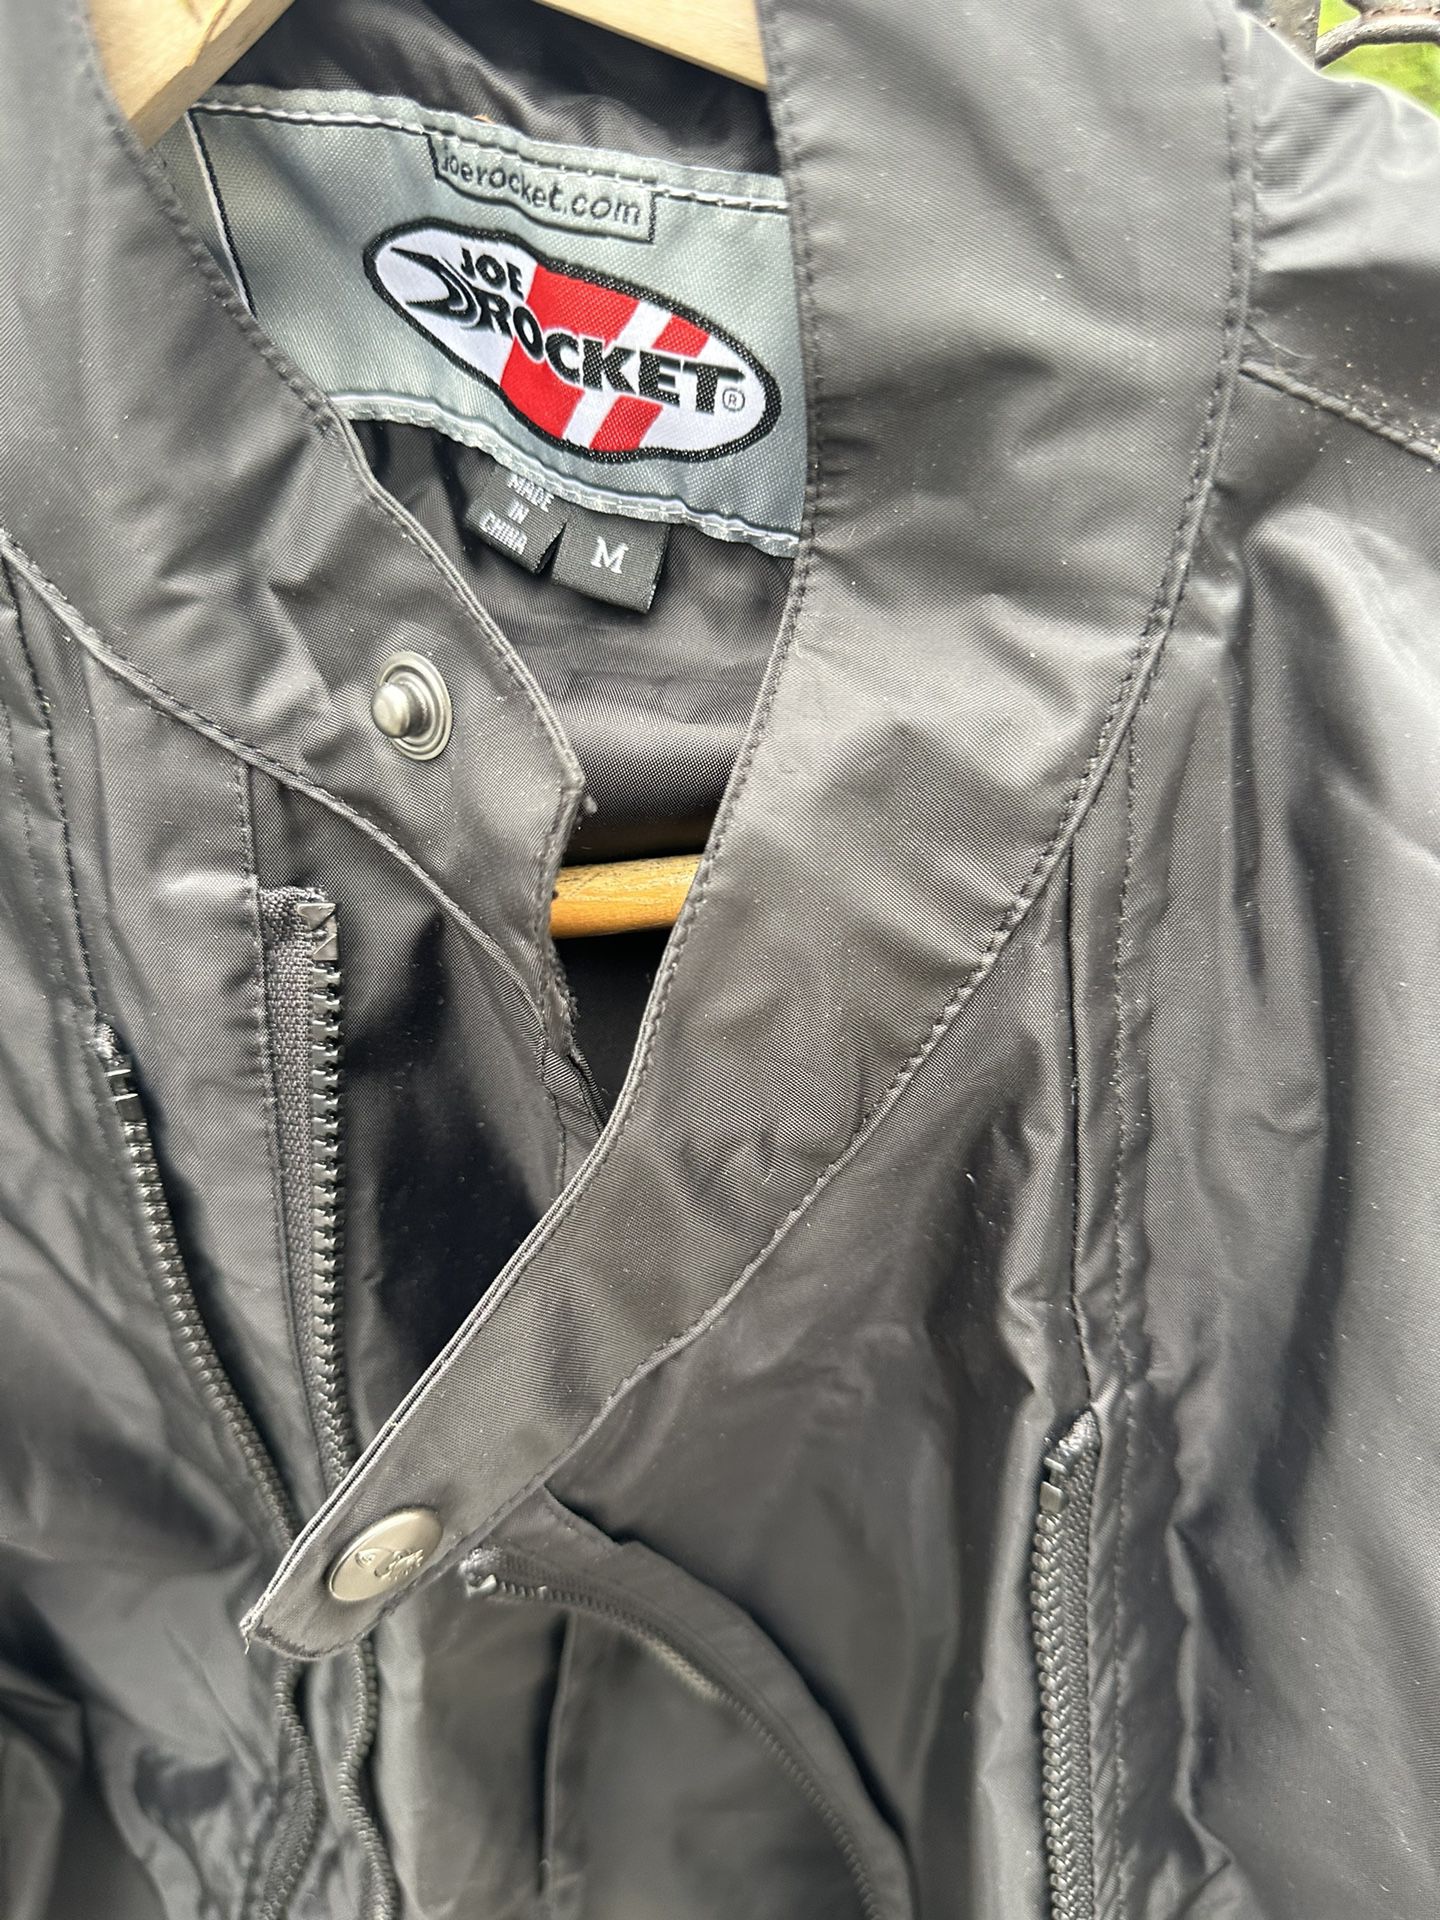 Joe Rocket Motorcycle Rain Wear Jacket Coat Size medium Raincoat